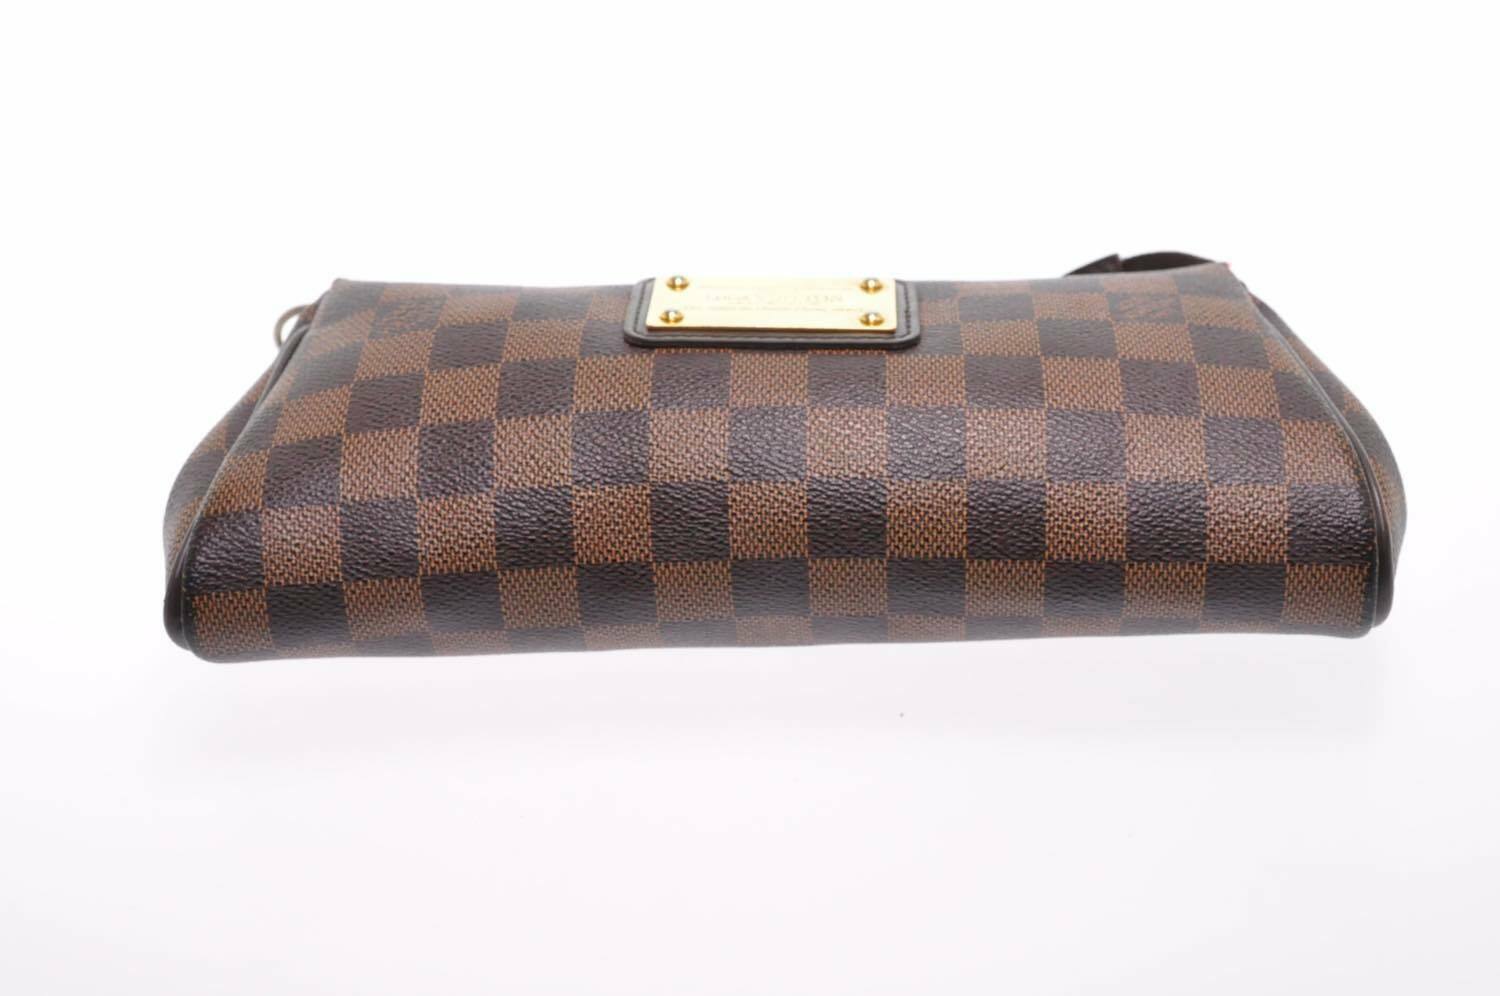 N55213 Brown Womens Eva Clutch Bag Handbags From